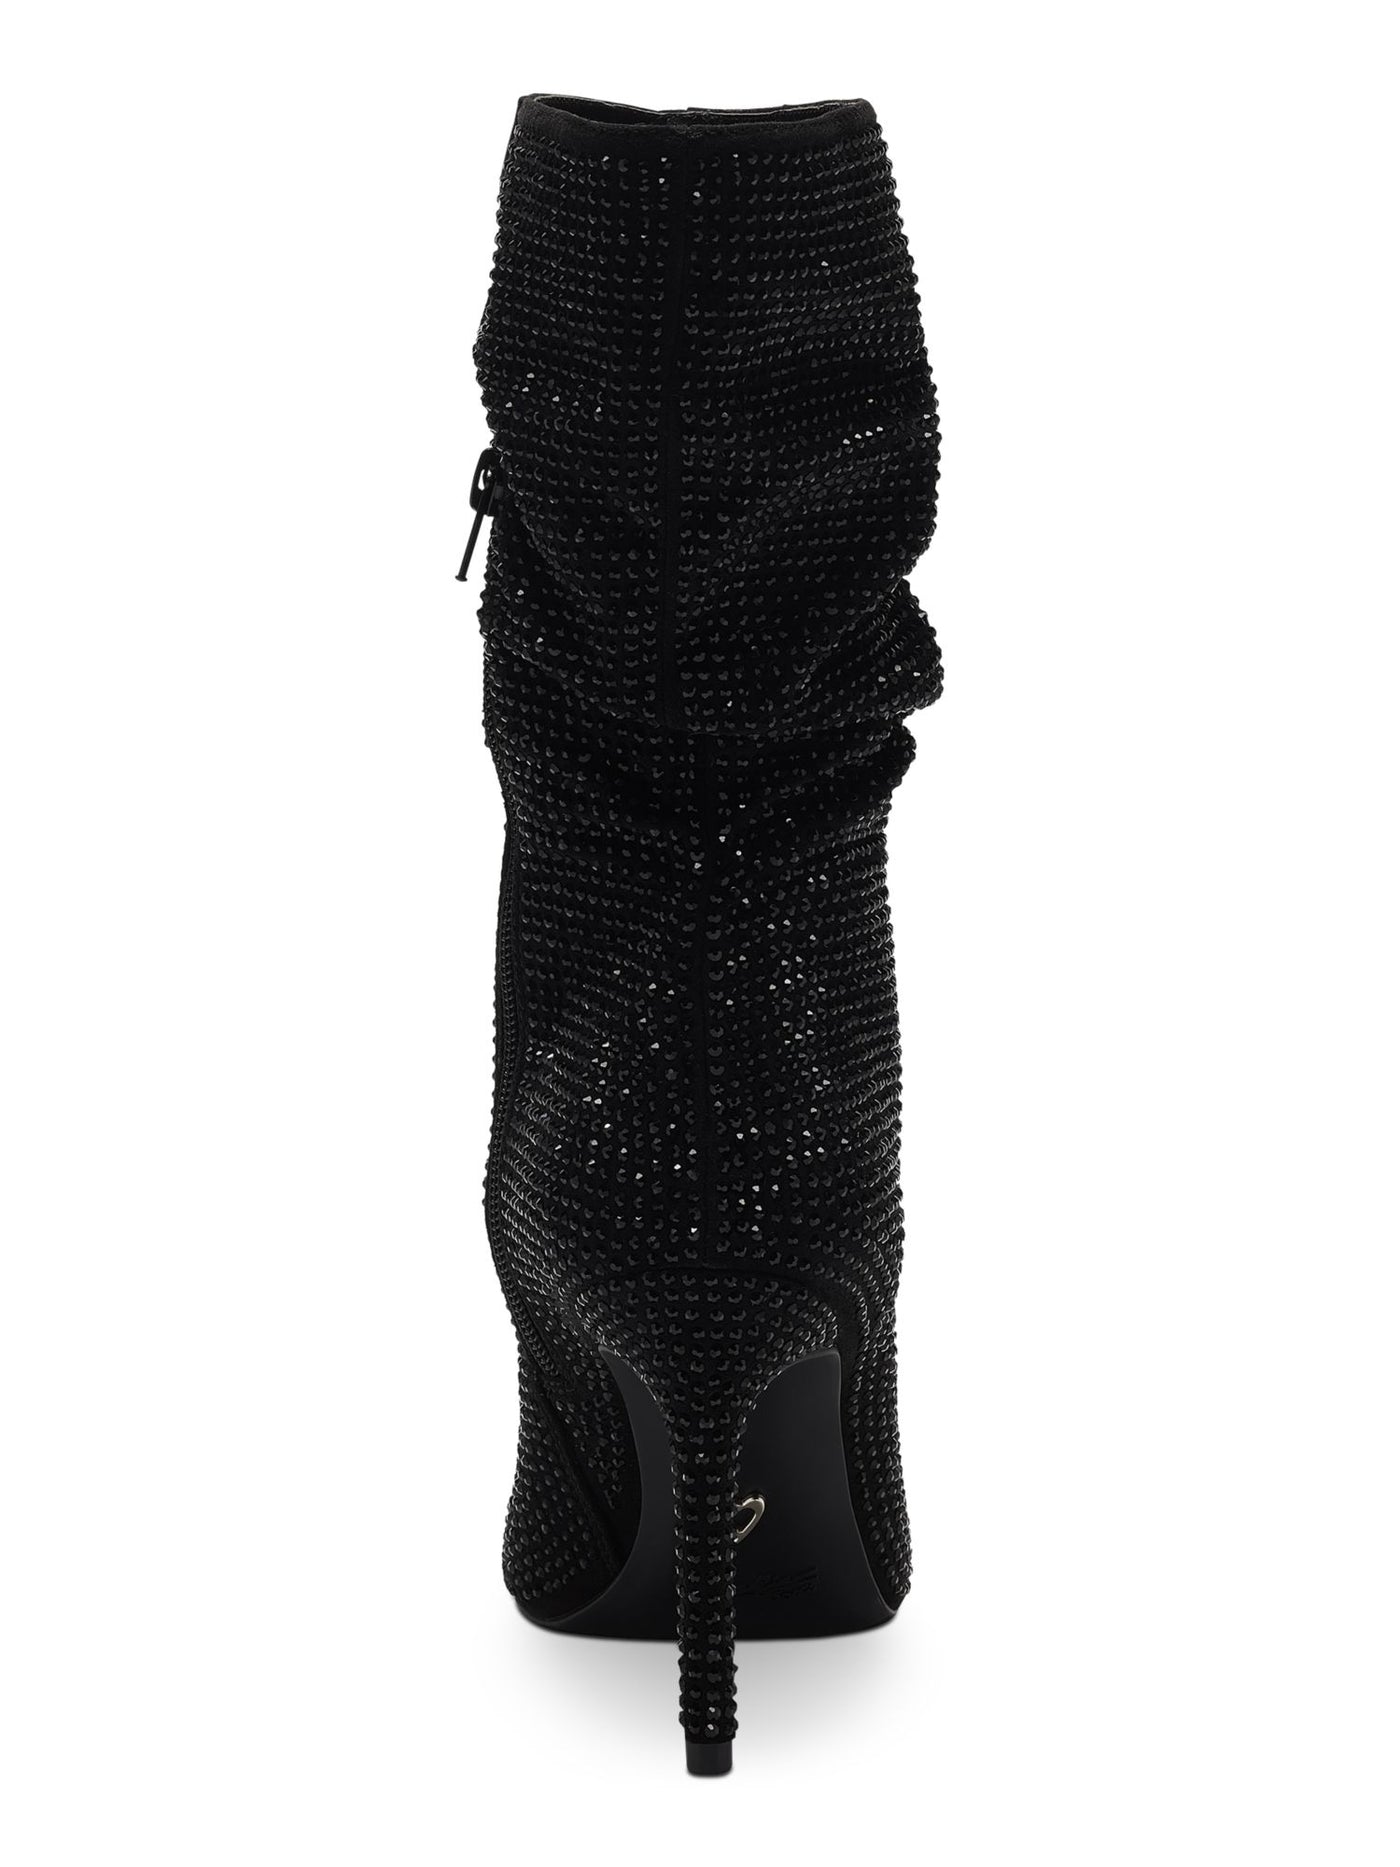 THALIA SODI Womens Black Rhinestone Cushioned Raquell Pointed Toe Stiletto Dress Slouch Boot 7 M